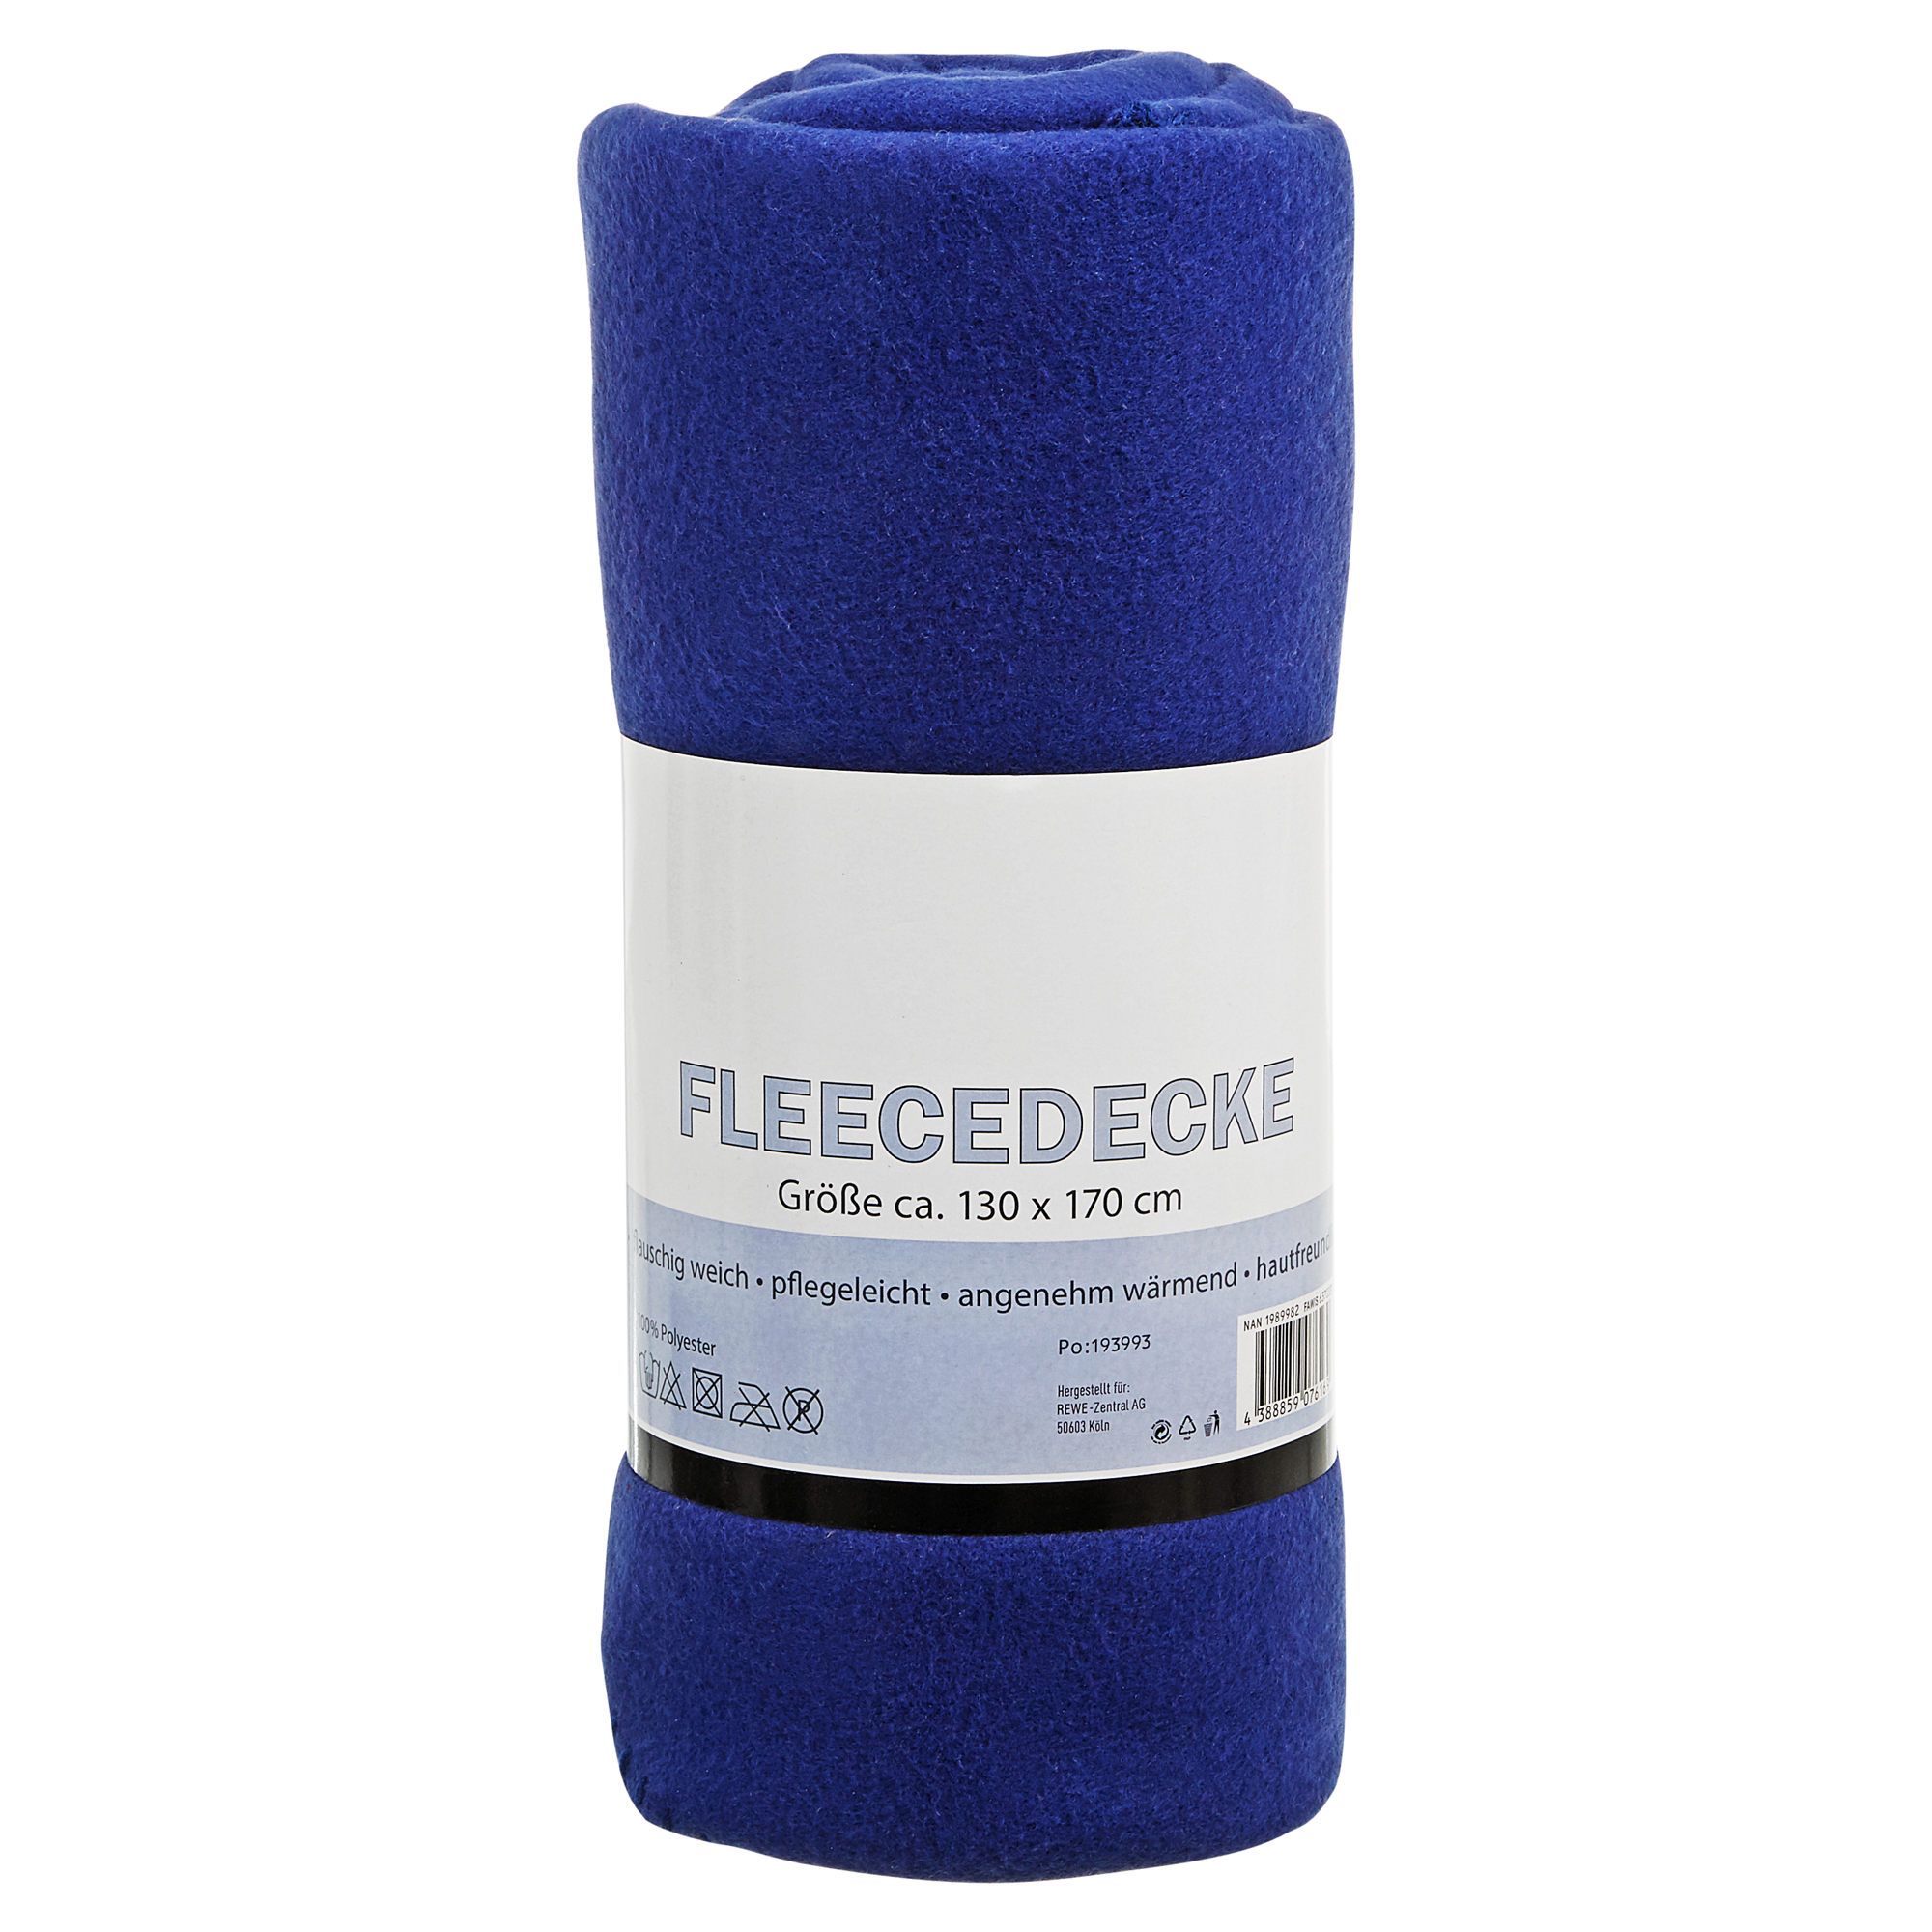 Fleecedecke blau 170 x 130 cm + product picture